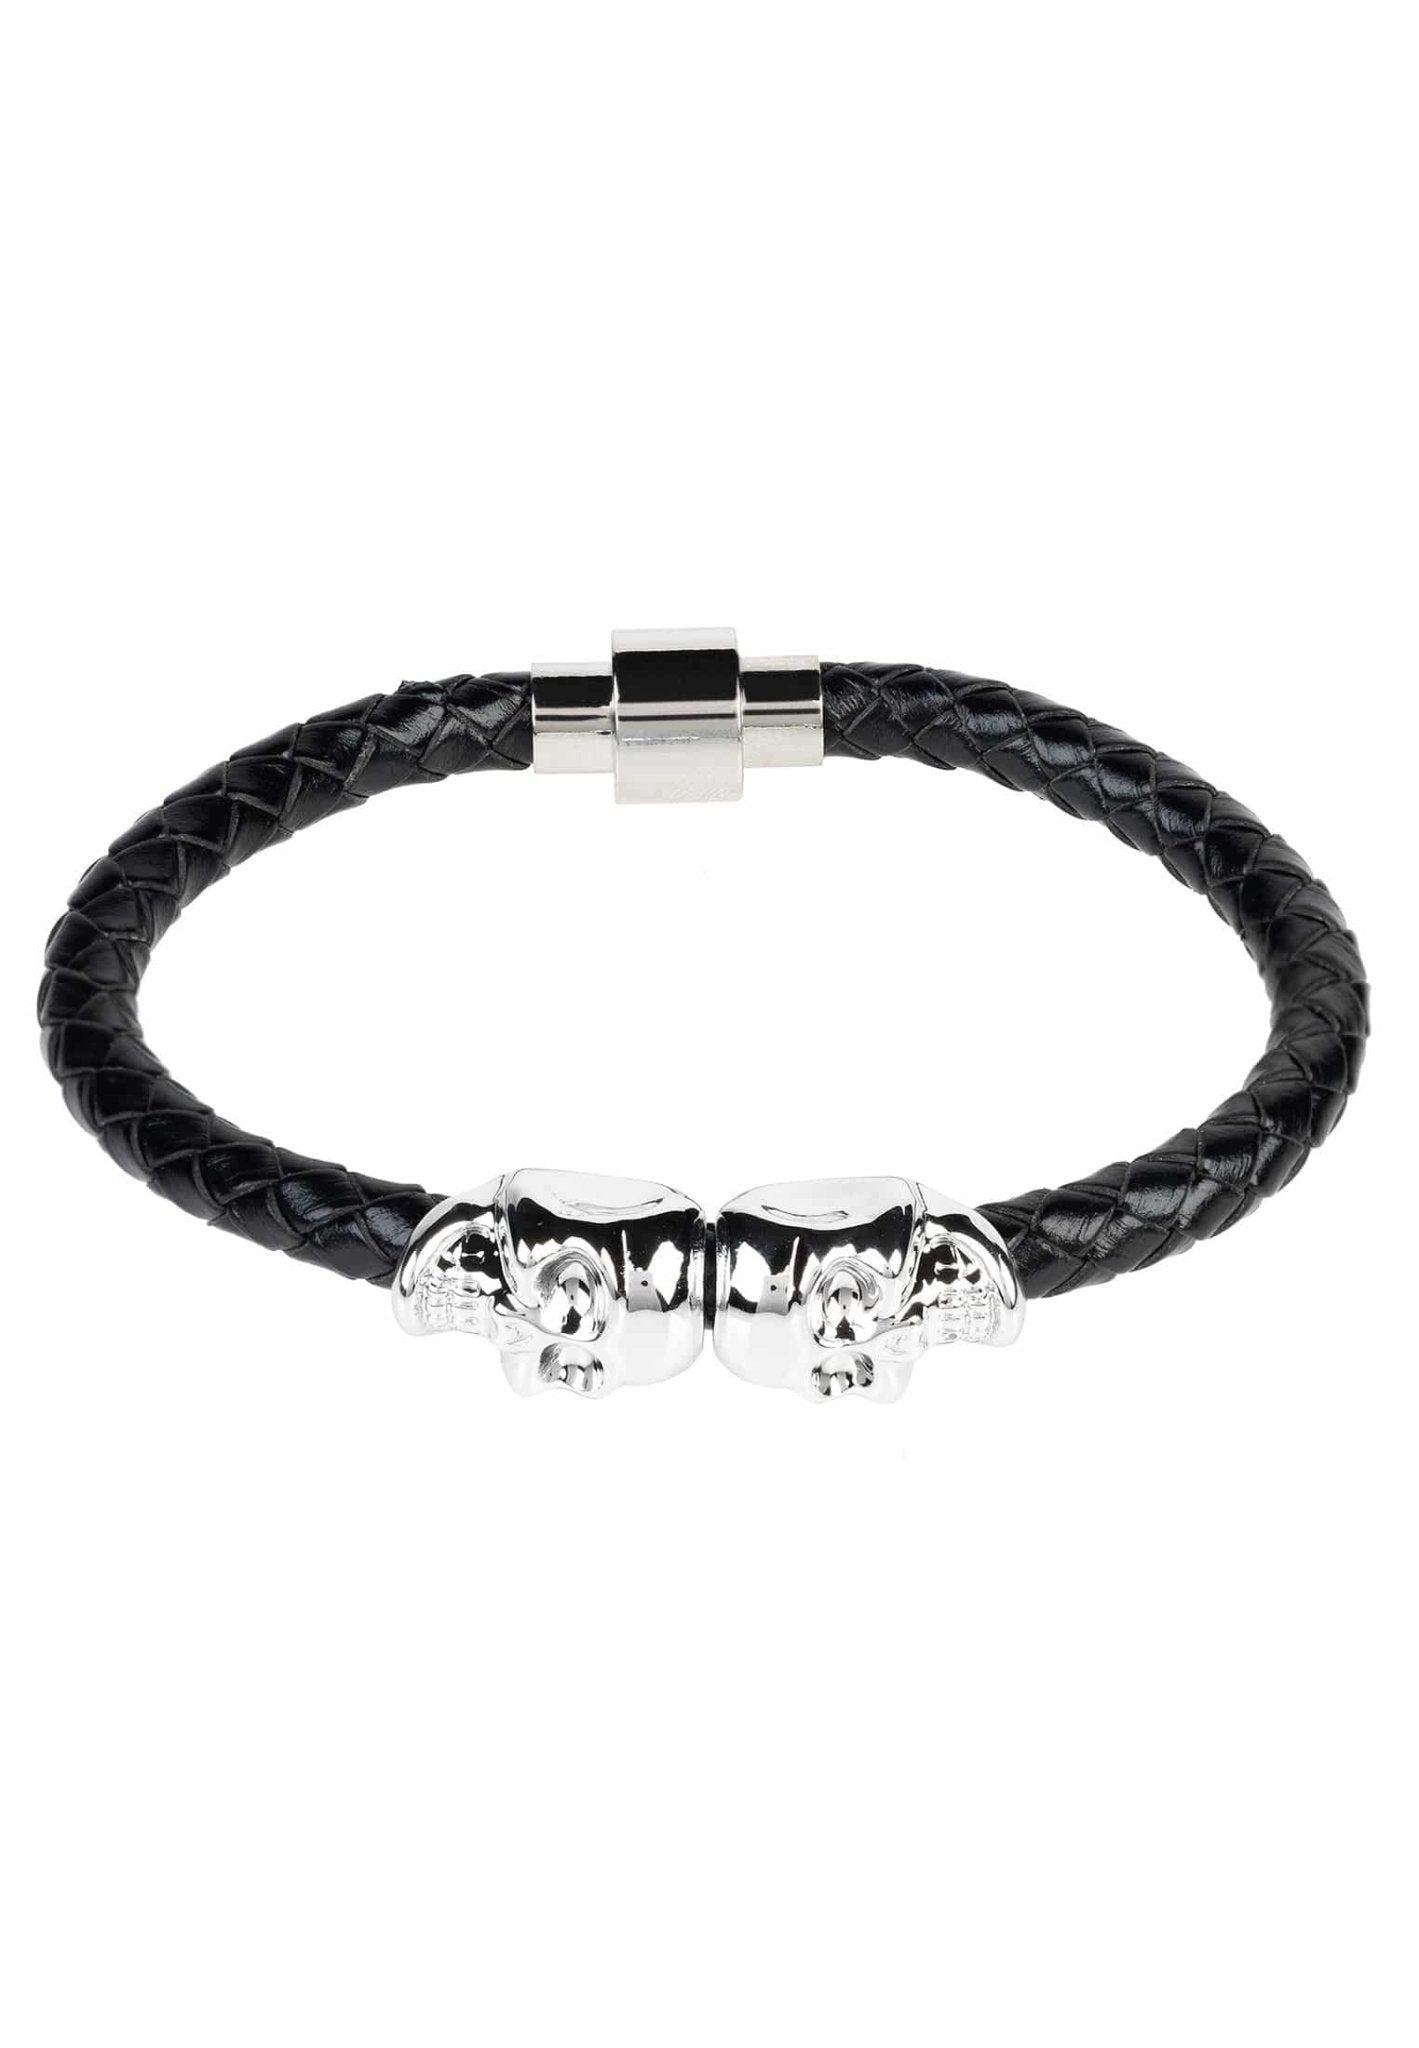 Skull Leather Bracelet Black Silver - LATELITA Bracelets